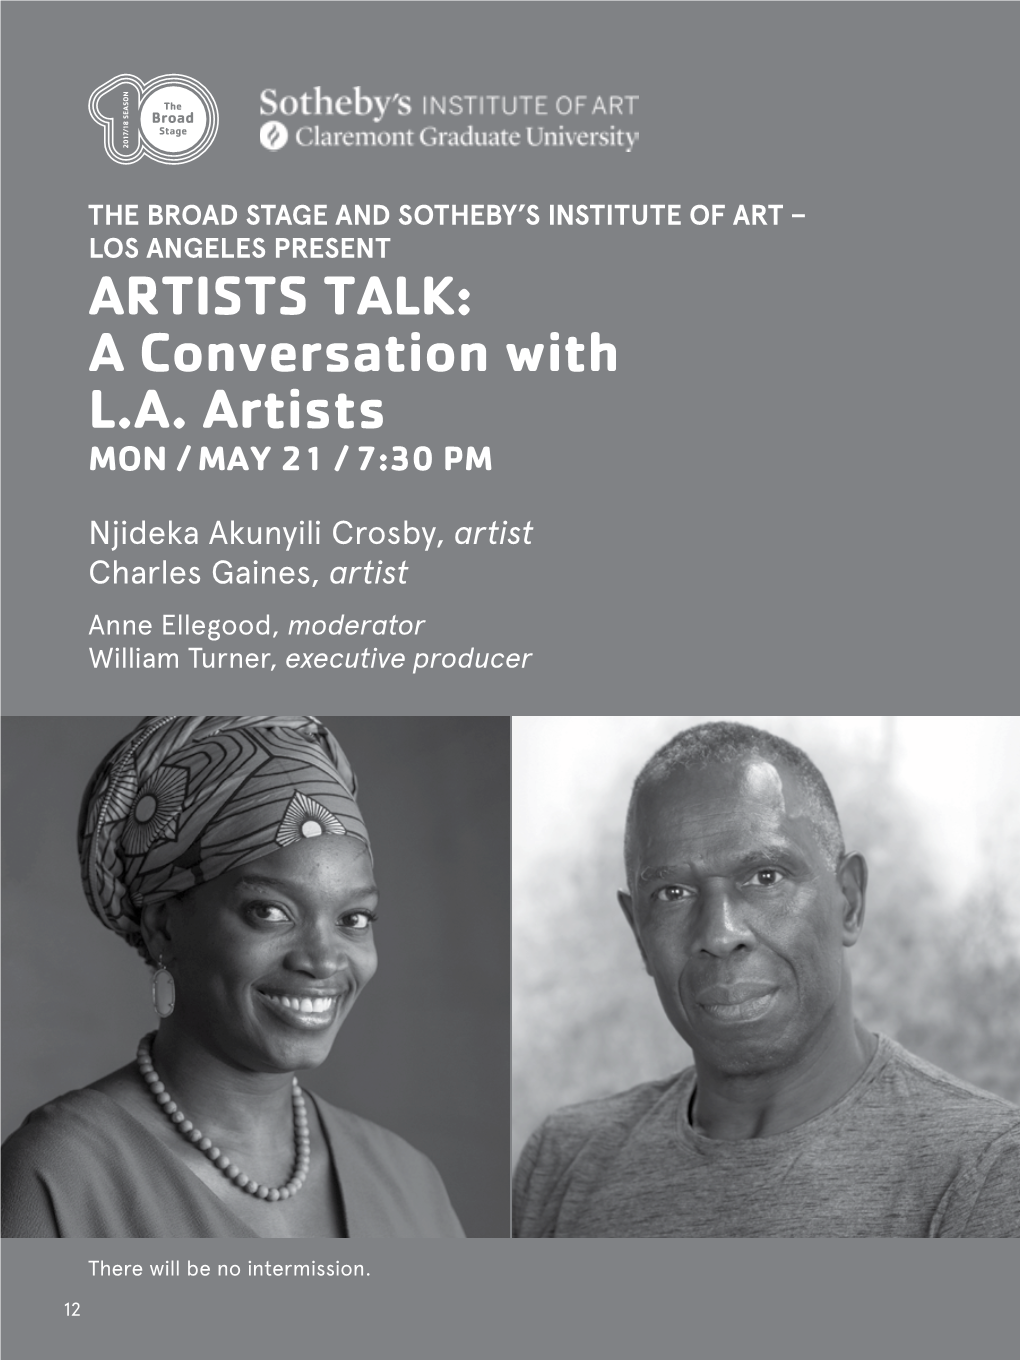 ARTISTS TALK: a Conversation with L.A